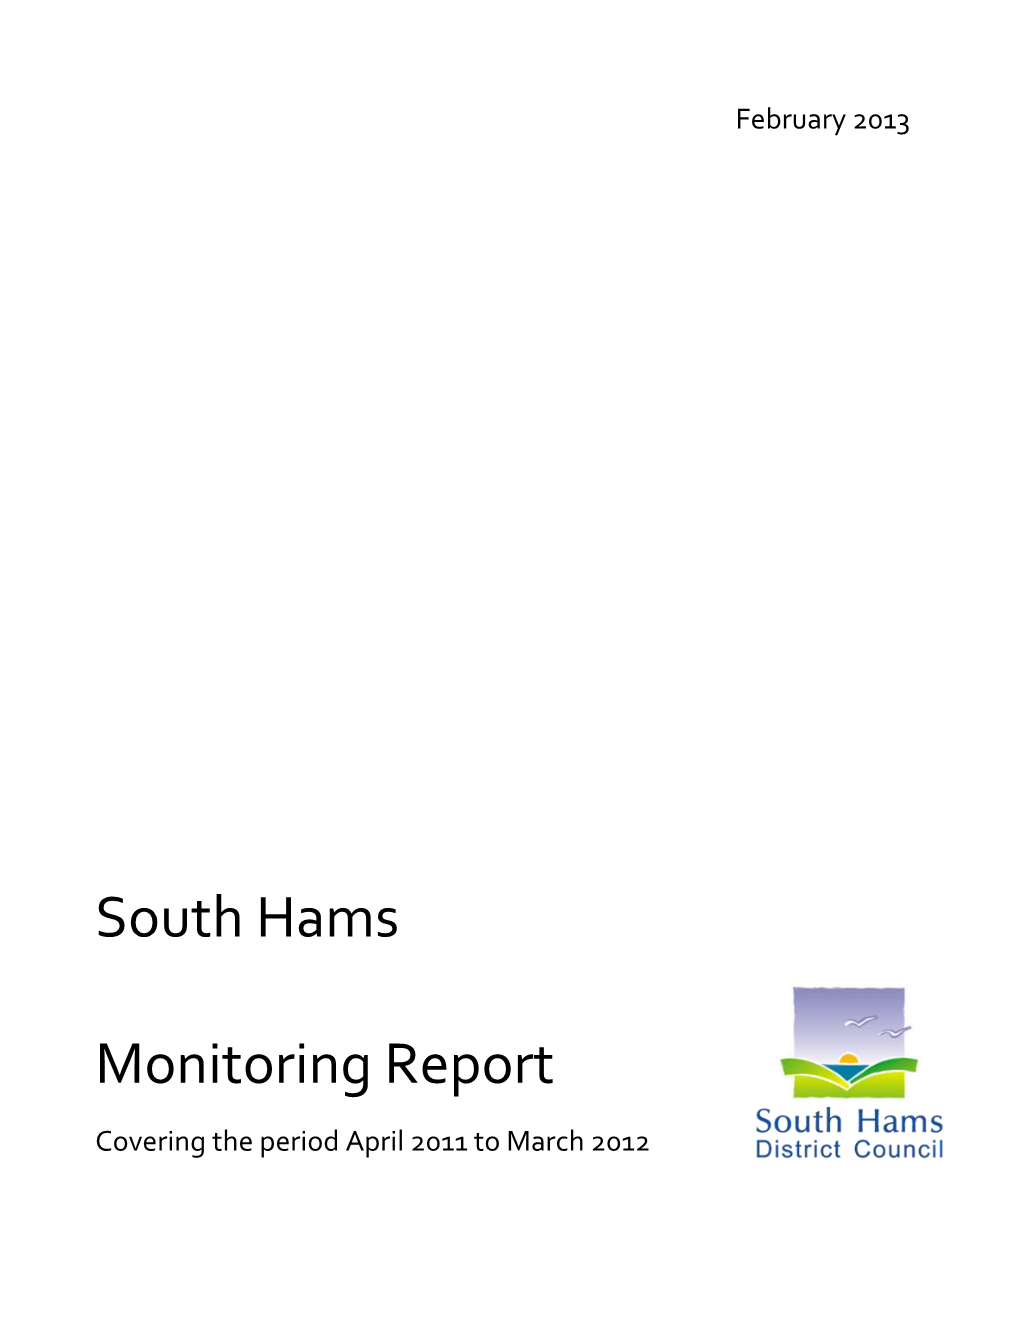 South Hams Monitoring Report 2012